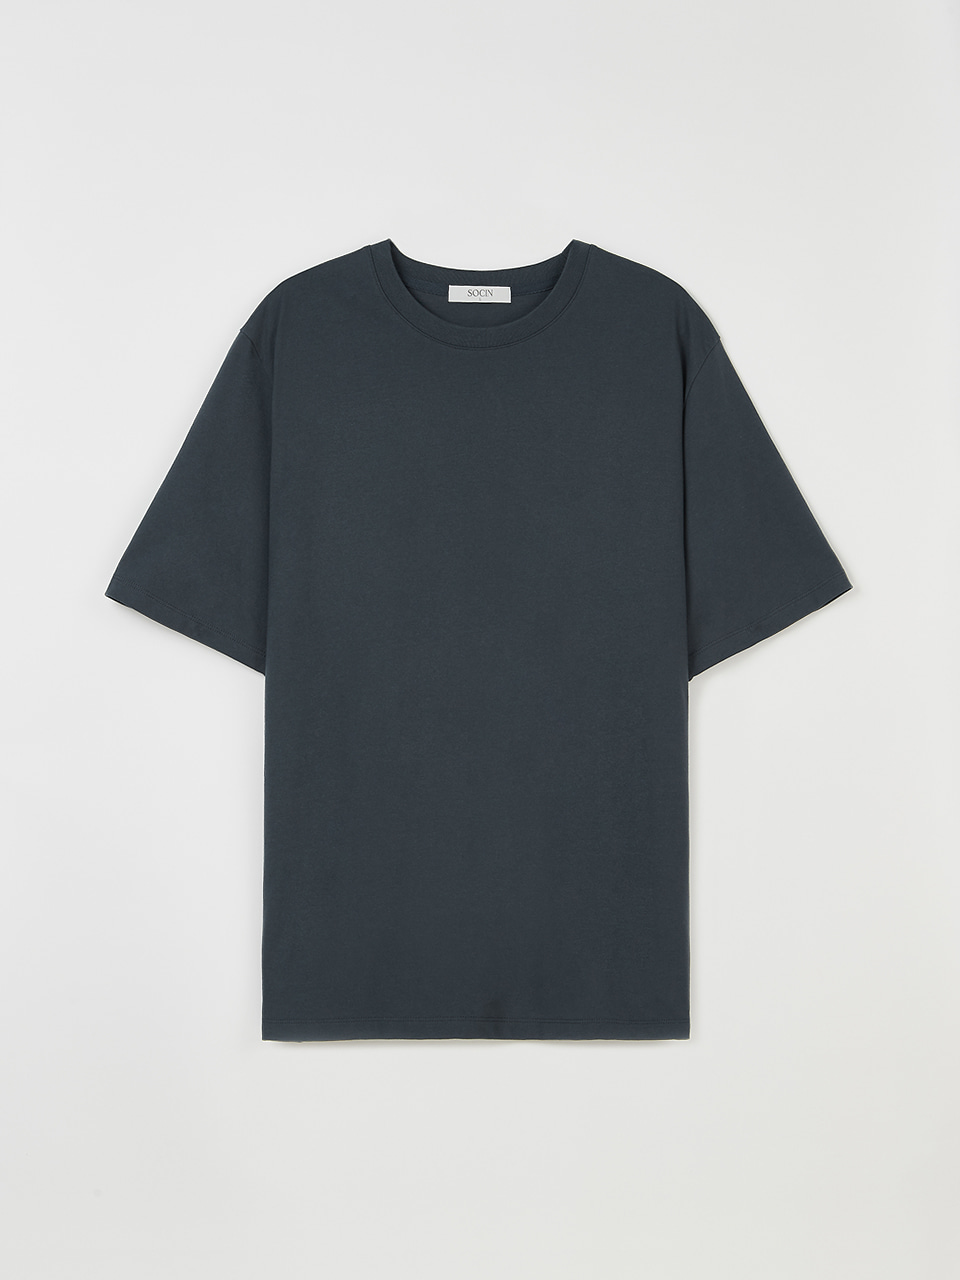 Essential Half Sleeve T-Shirt (Charcoal)